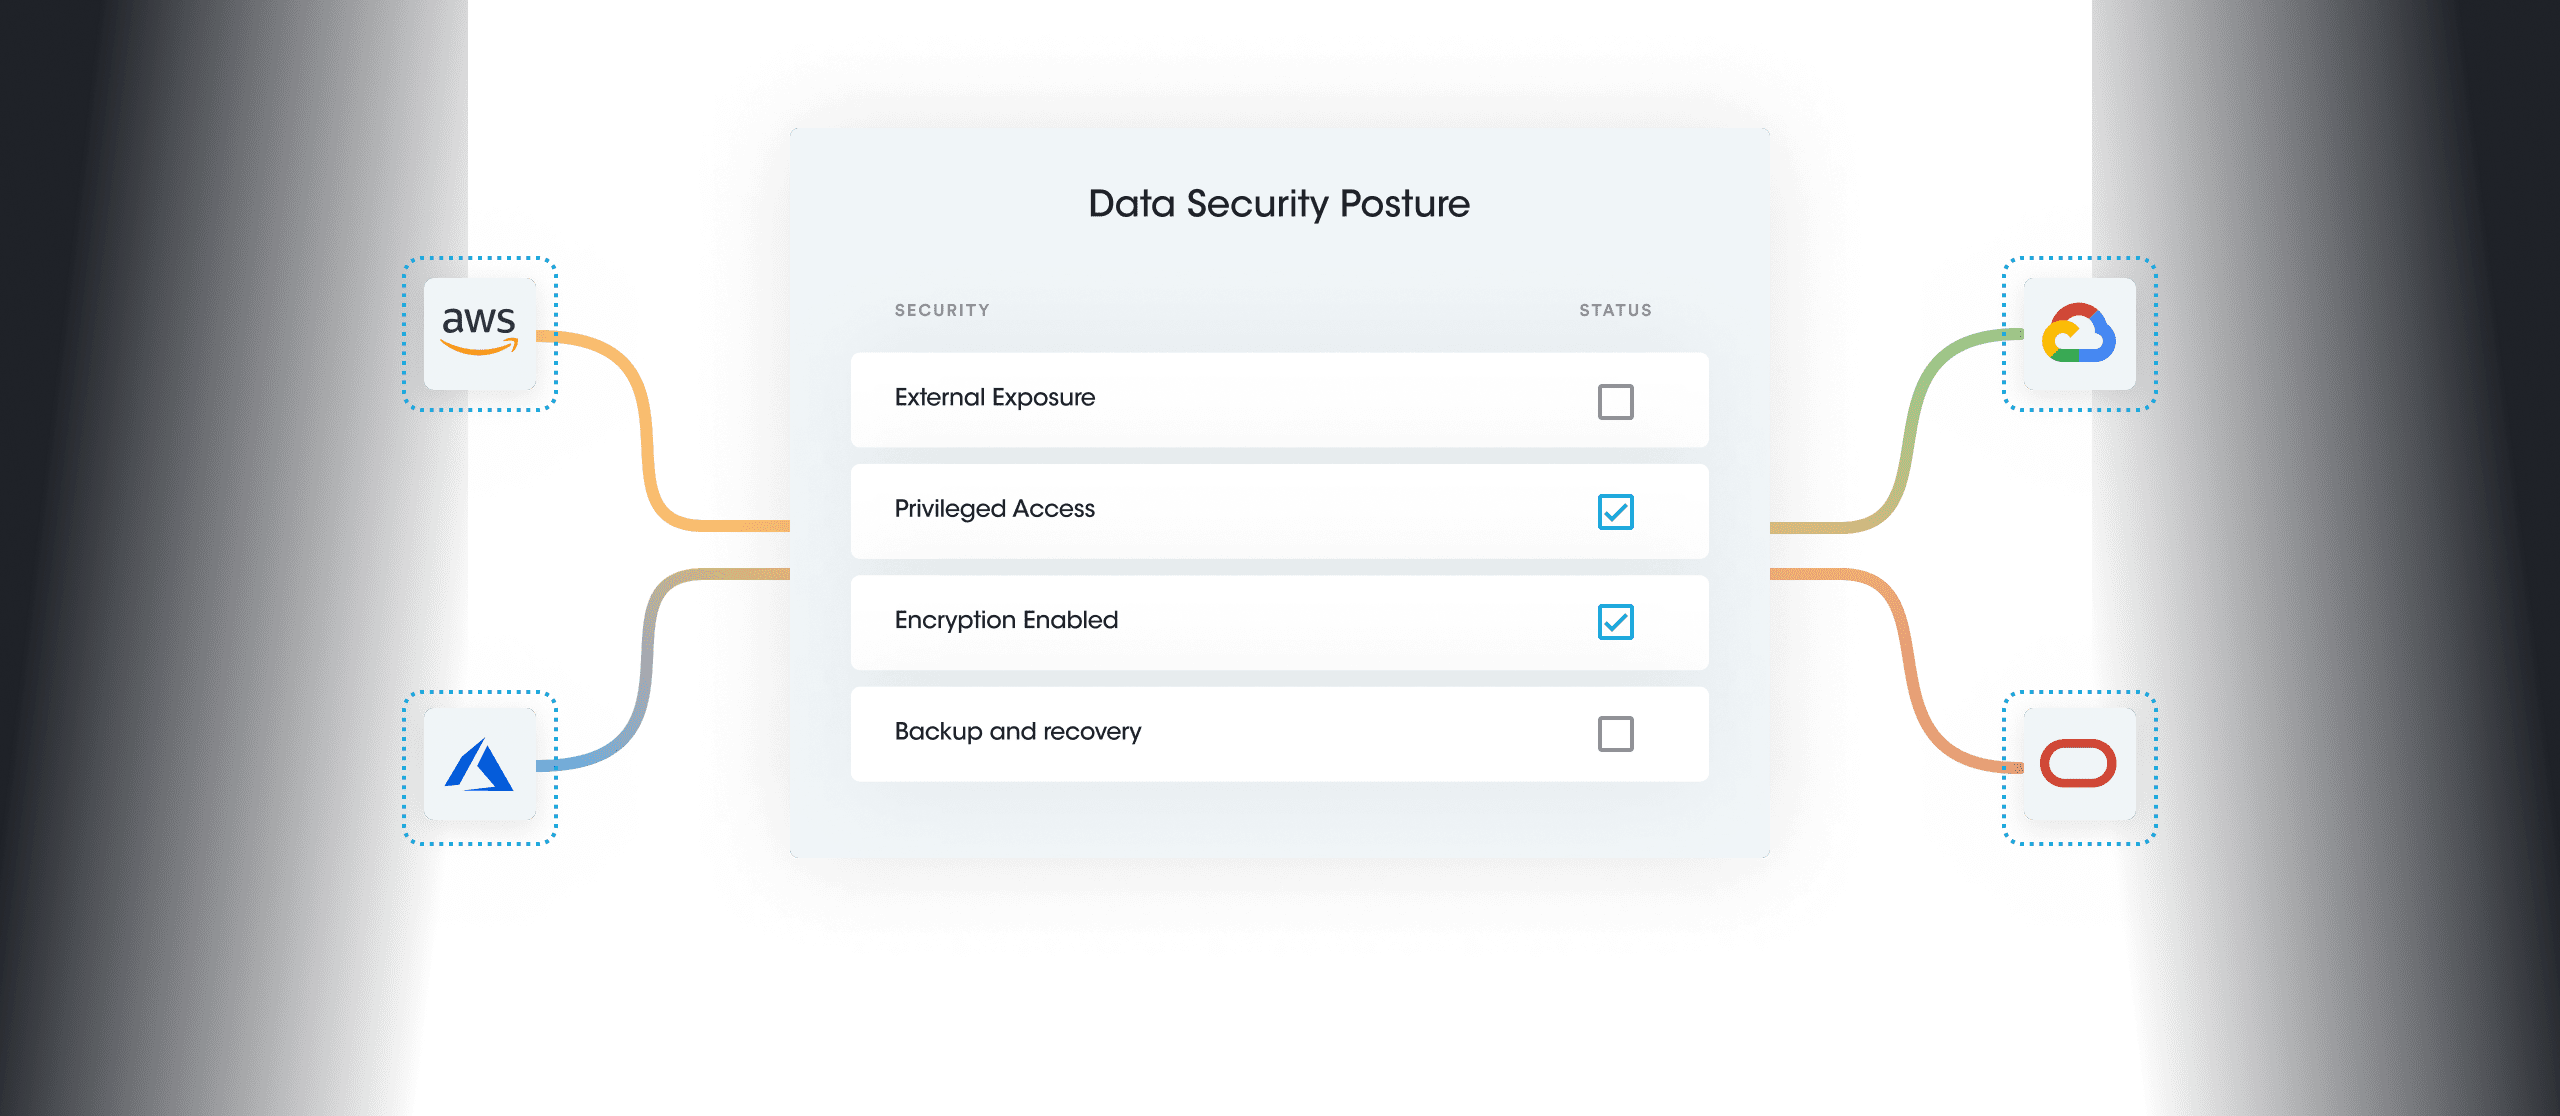 Data Security Posture